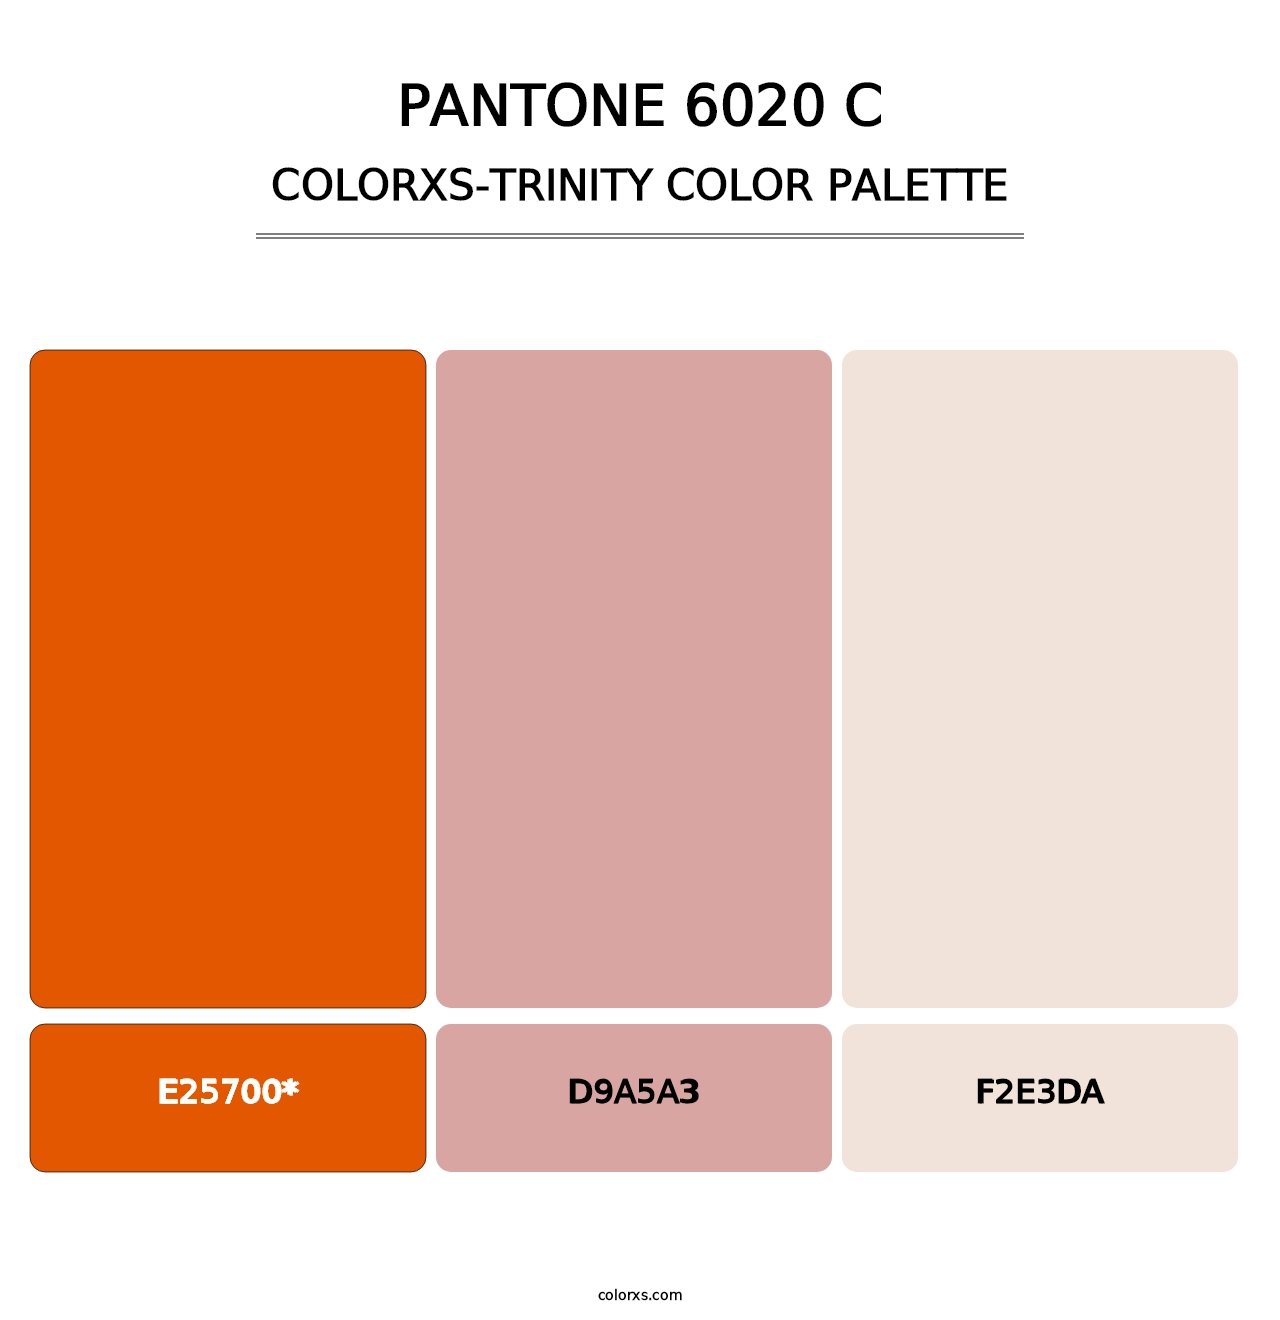 PANTONE 6020 C - Colorxs Trinity Palette